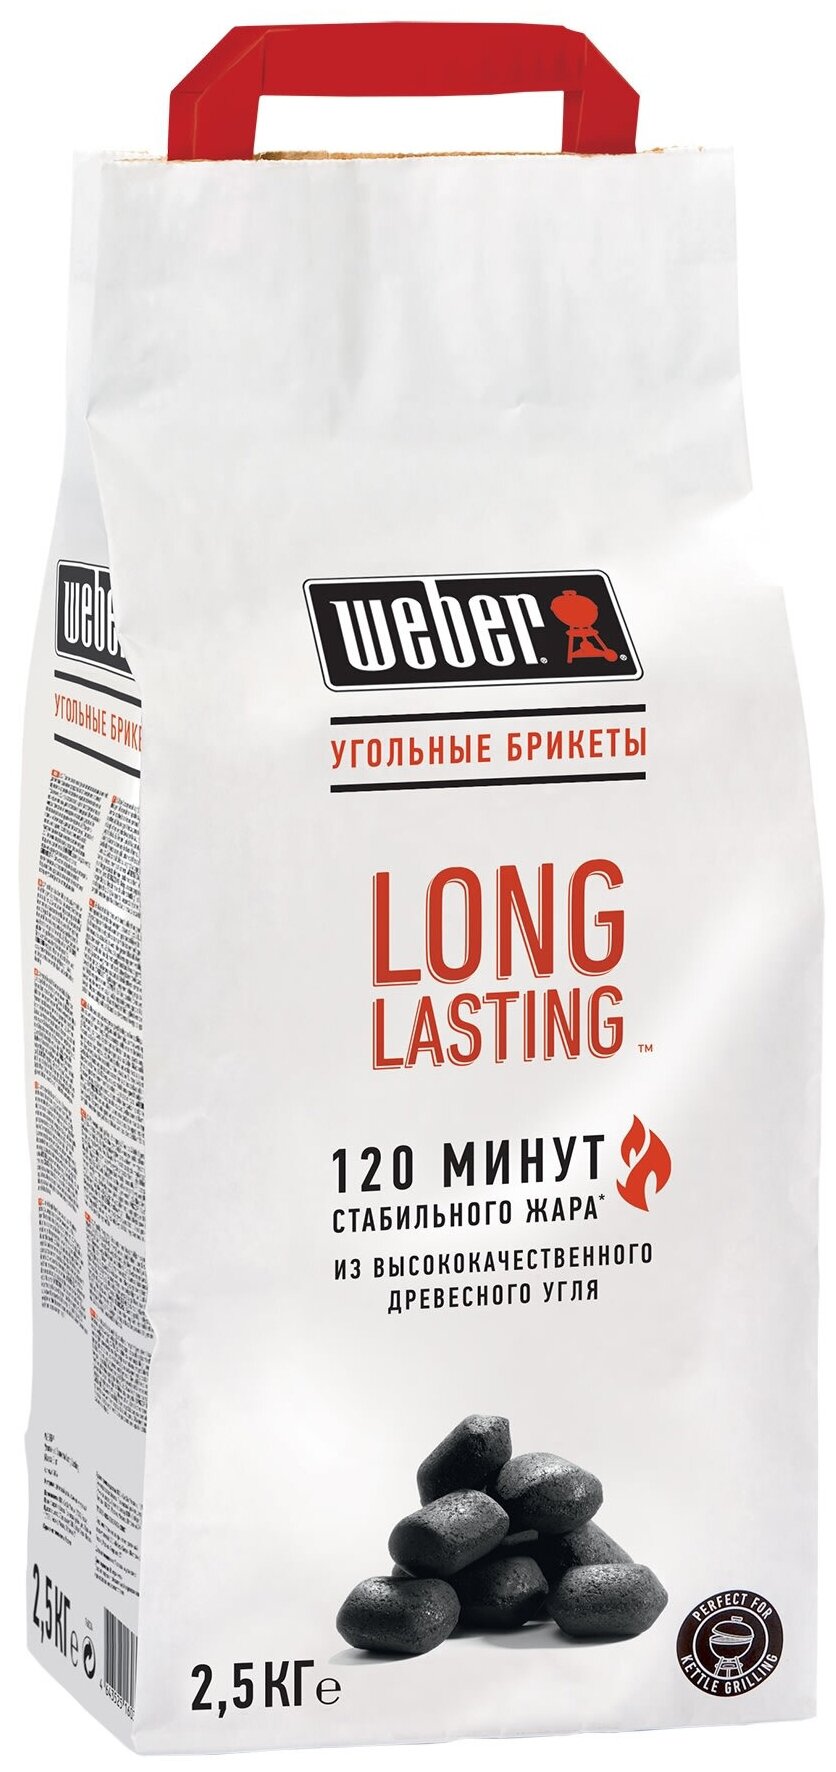 Weber Угольные брикеты «Long Lasting» 25 кг